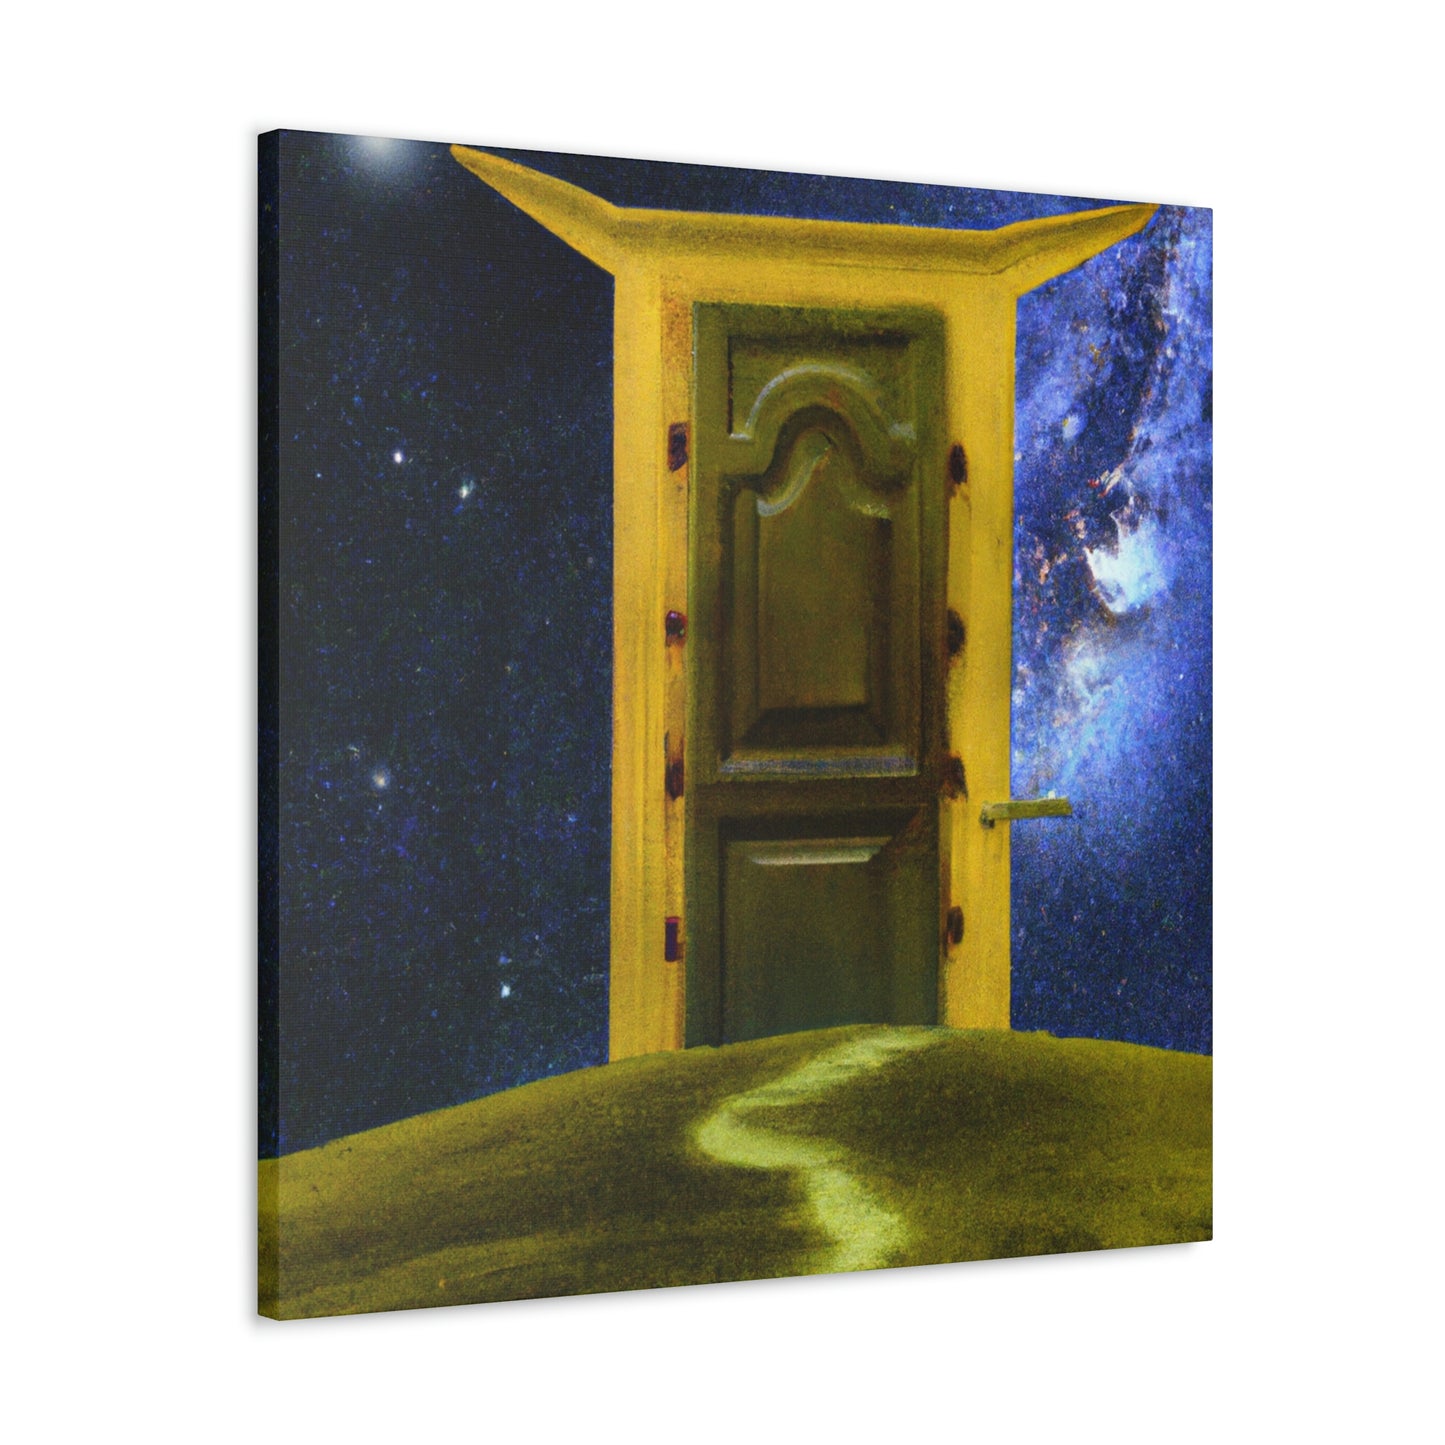 The Heavenly Threshold - The Alien Canva